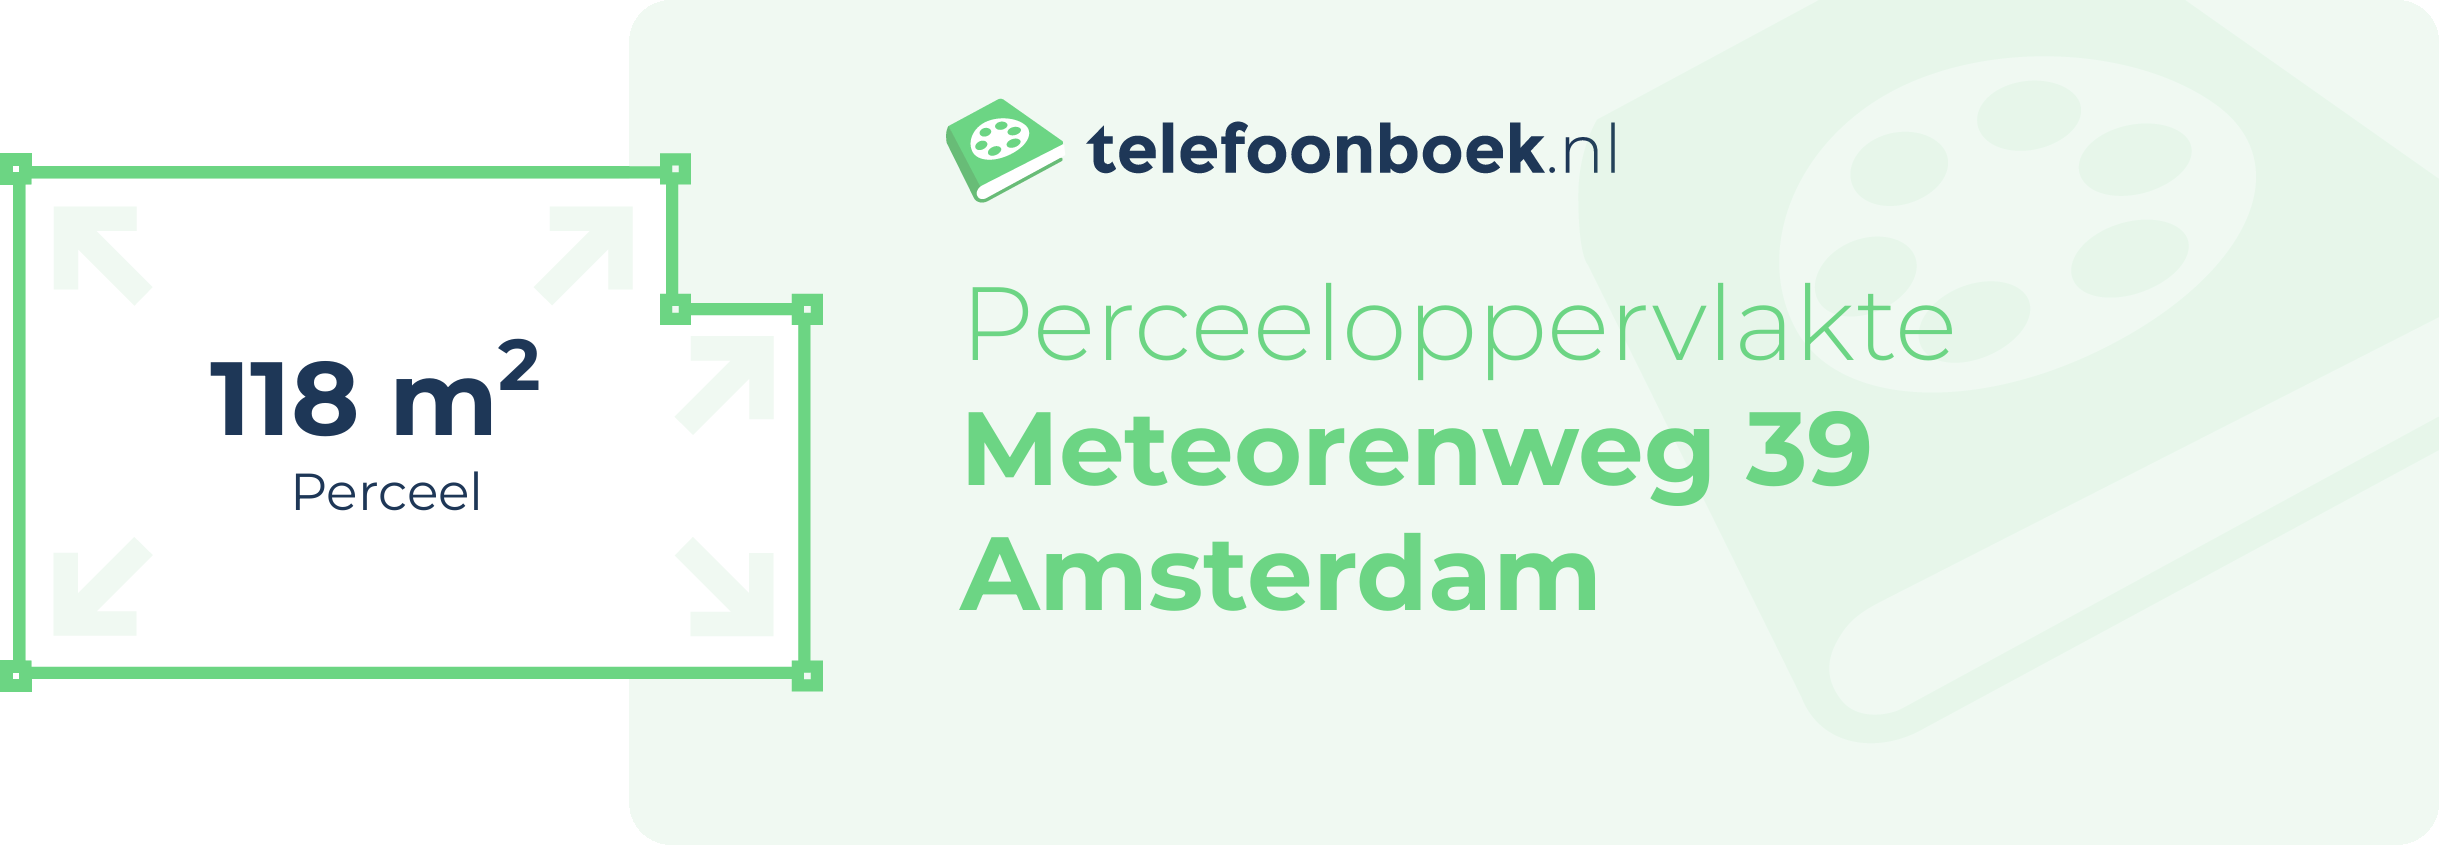 Perceeloppervlakte Meteorenweg 39 Amsterdam